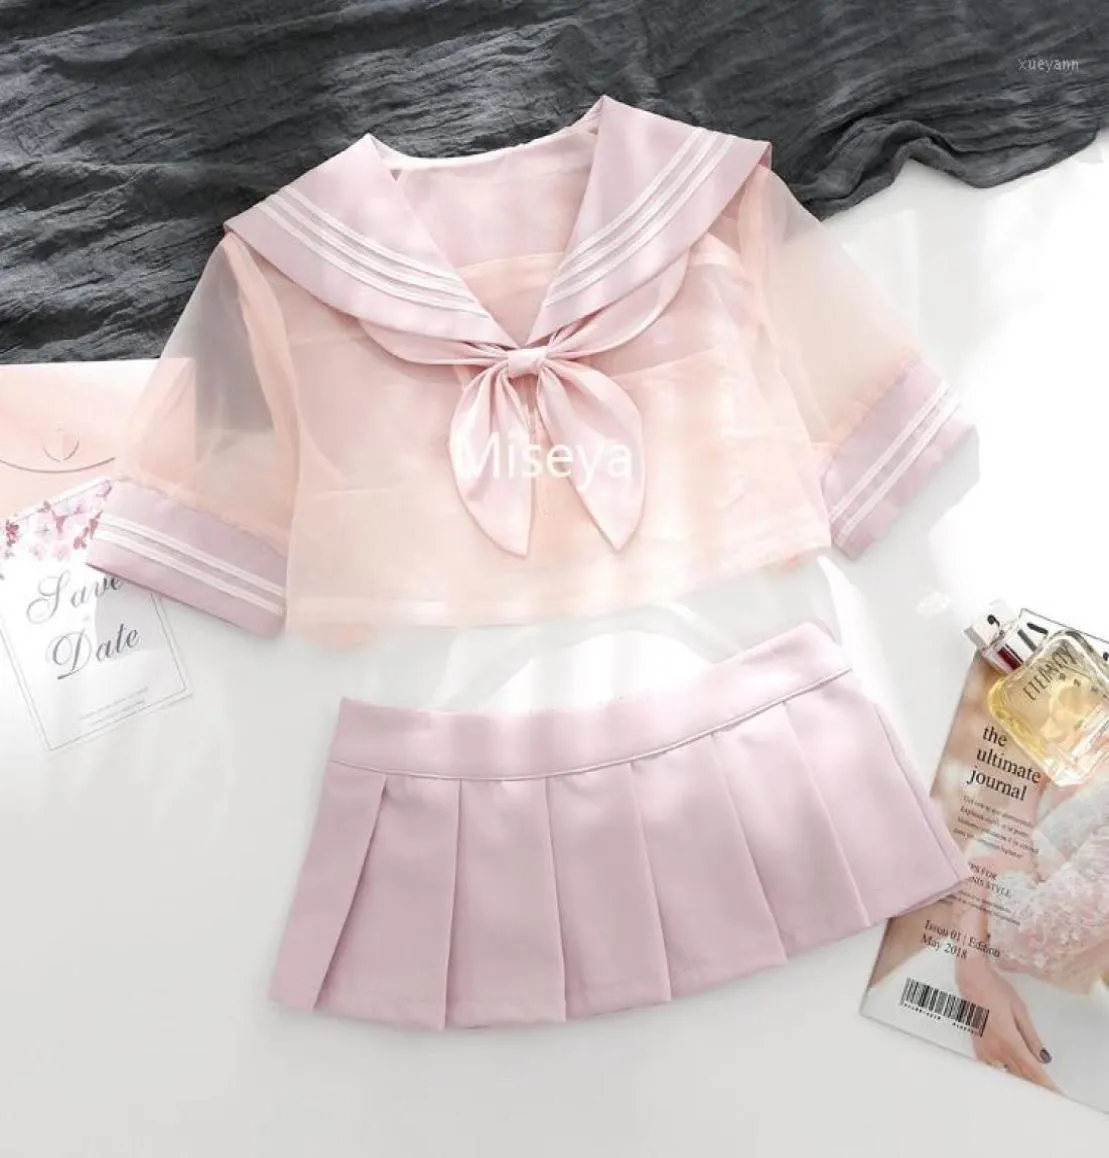 Vestido de marinheiro rosa fofo lolita roupa erótica japonesa lingerie figurmume menina uniforme sexy kawaii lingerie roupas íntimas